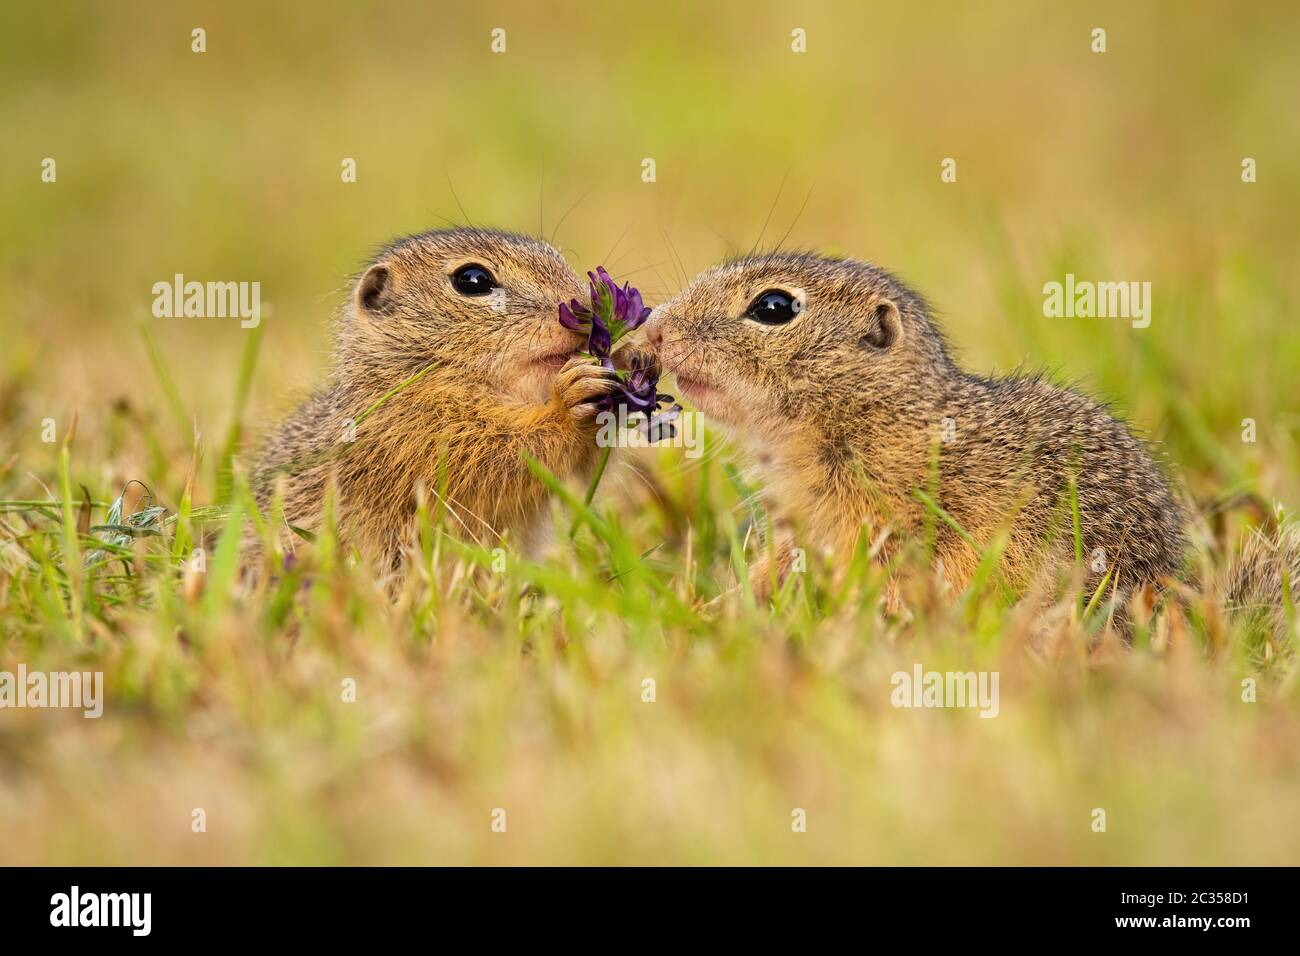 Two european ground squirrel, spermophilus citellus, touching flower on a  meadow in summer nature. Love bond between cute wild animals on grassland.  M Stock Photo - Alamy